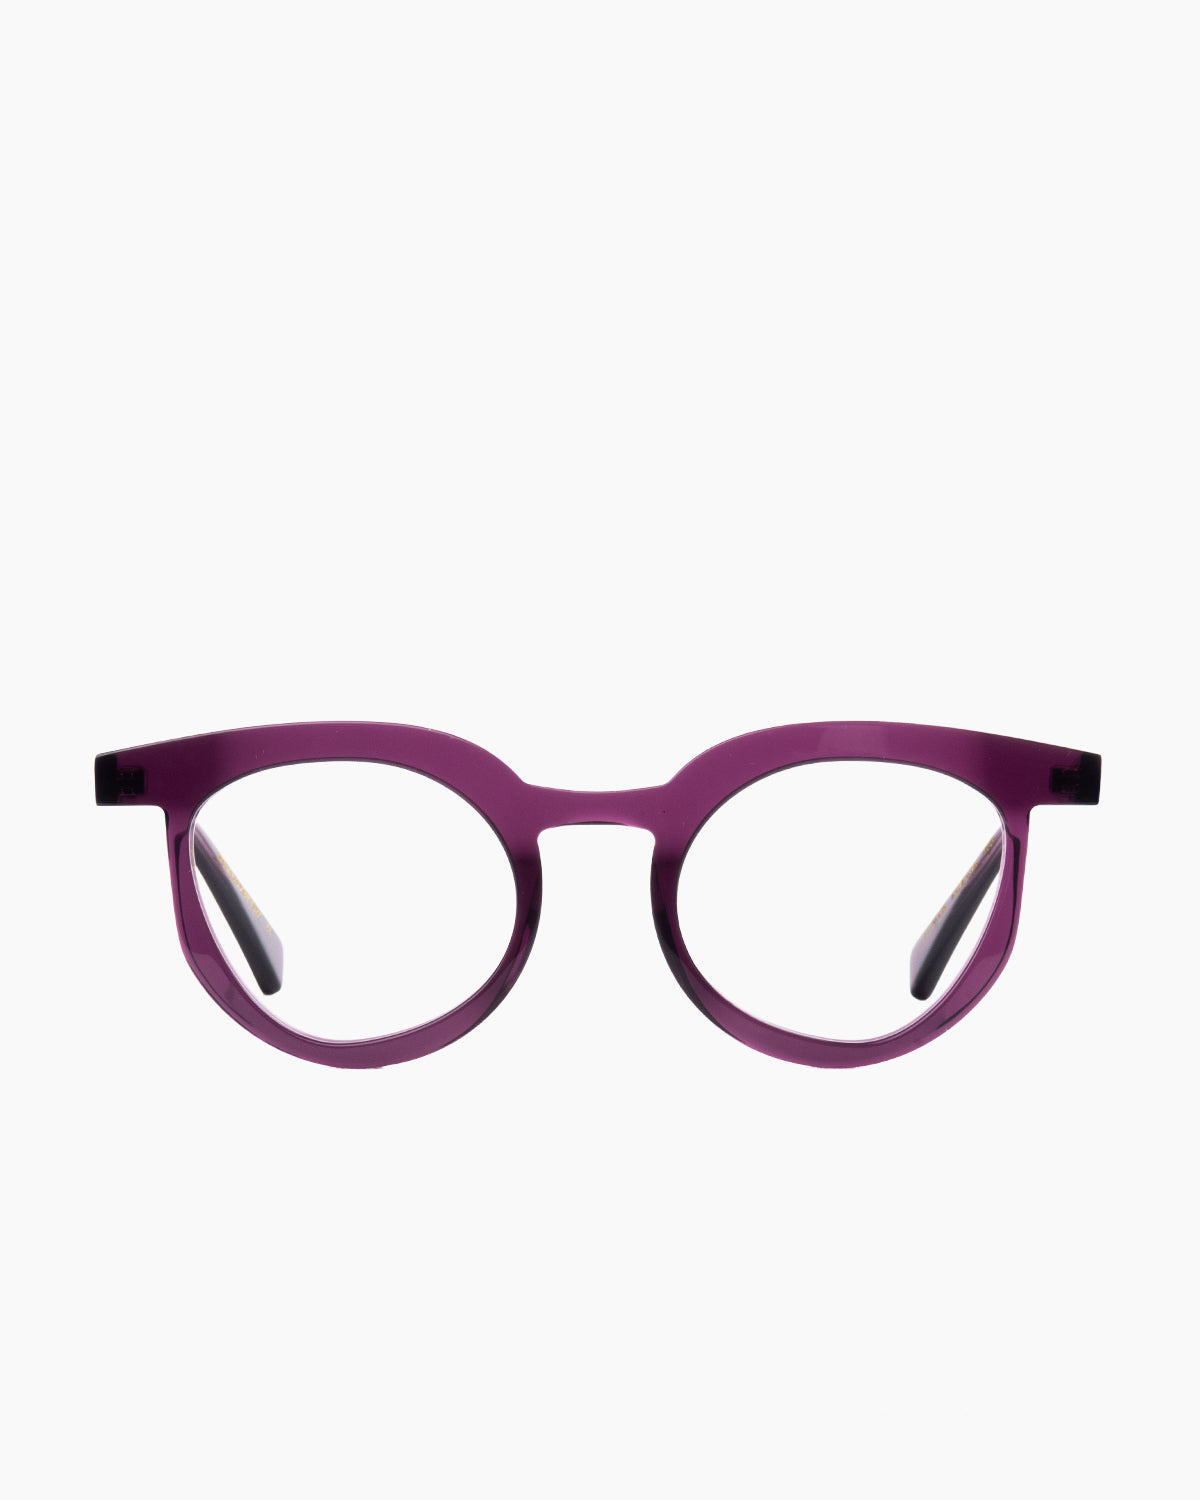 Gamine - stjeancapferrat kids - cyrstal/aubergine | Bar à lunettes